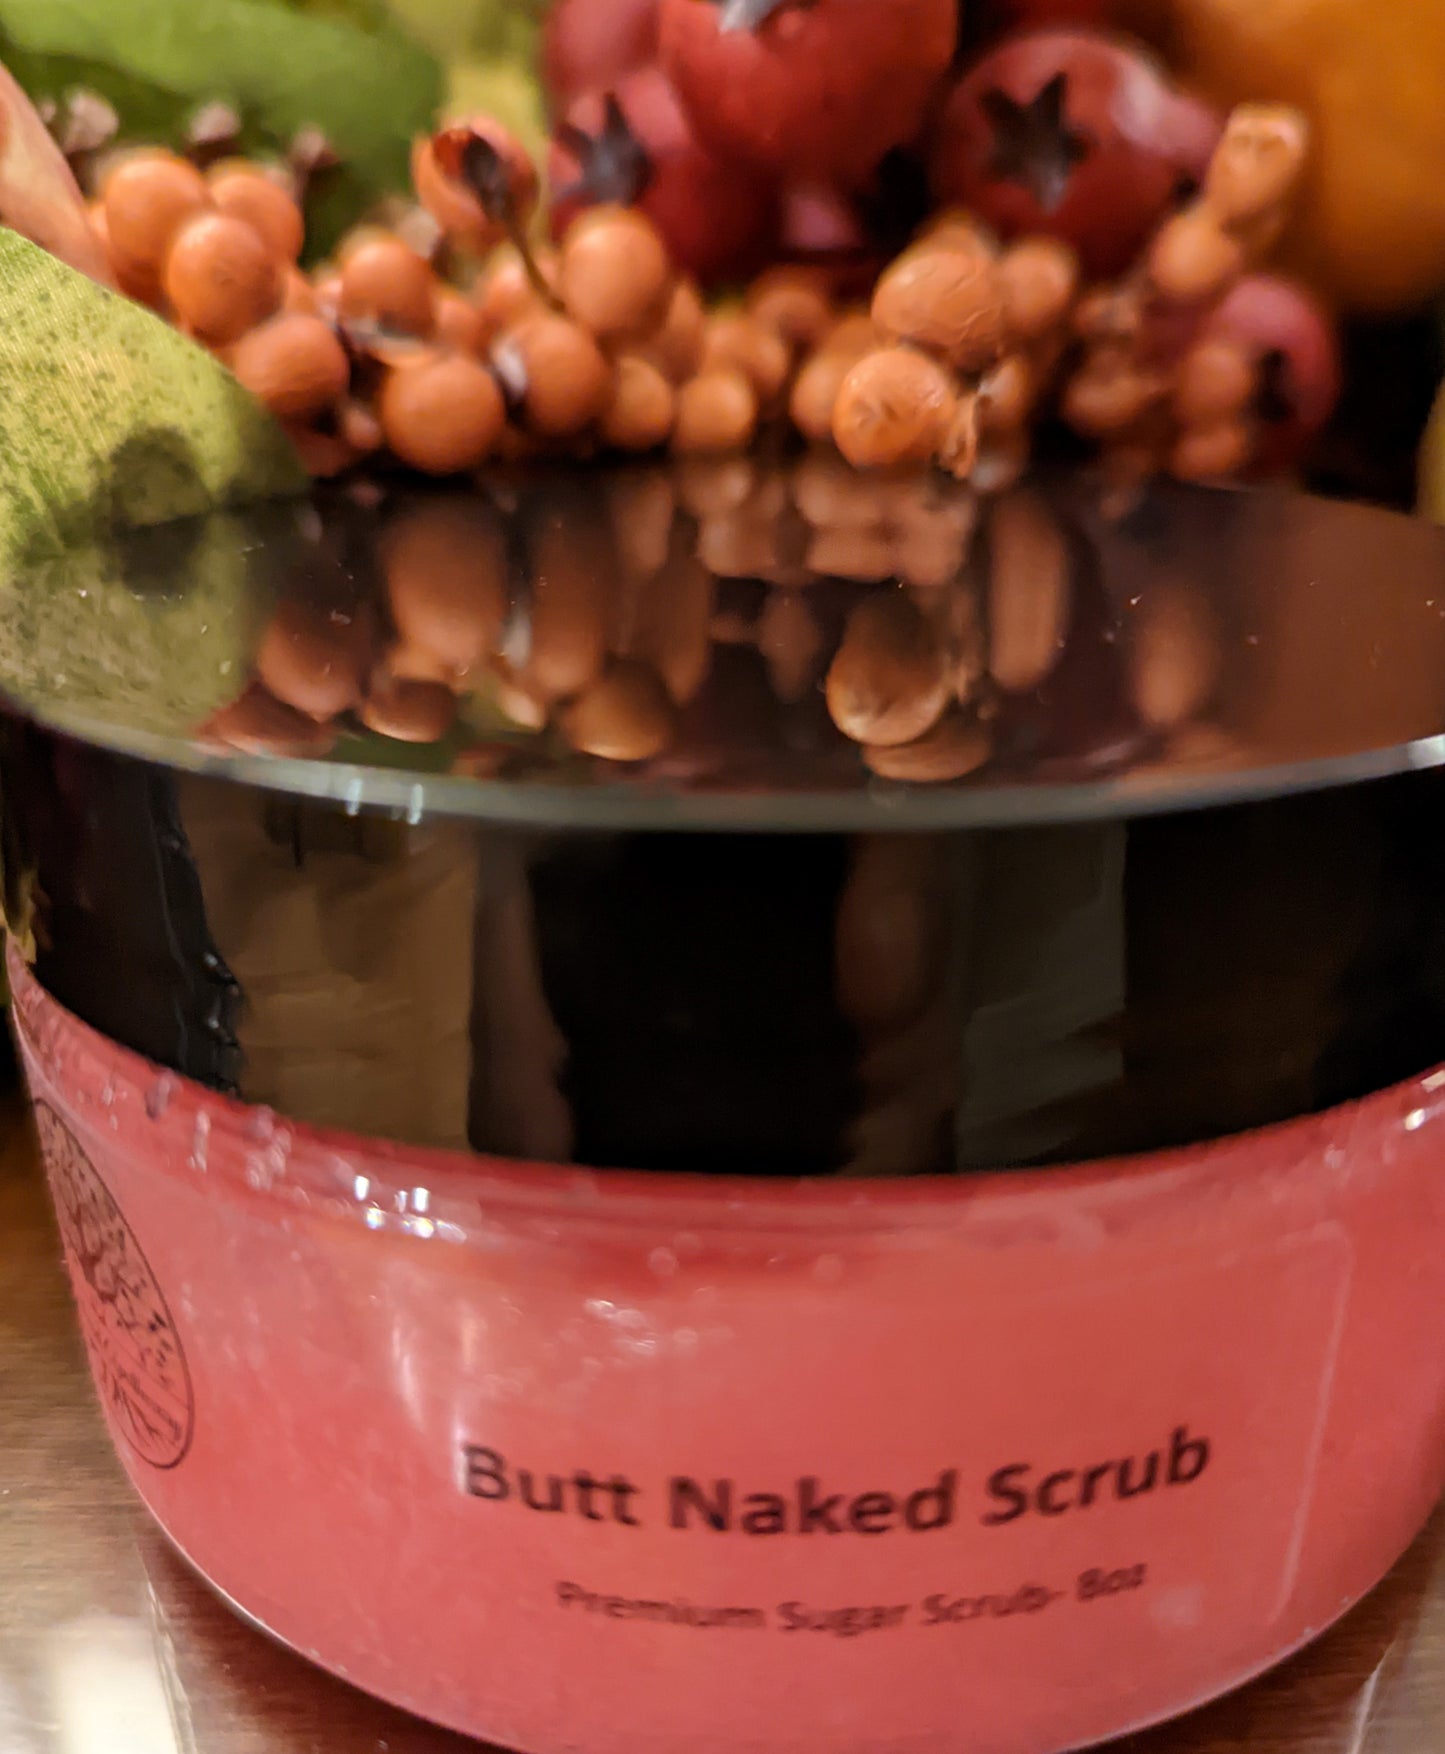 Butt Naked Sugar Scrub